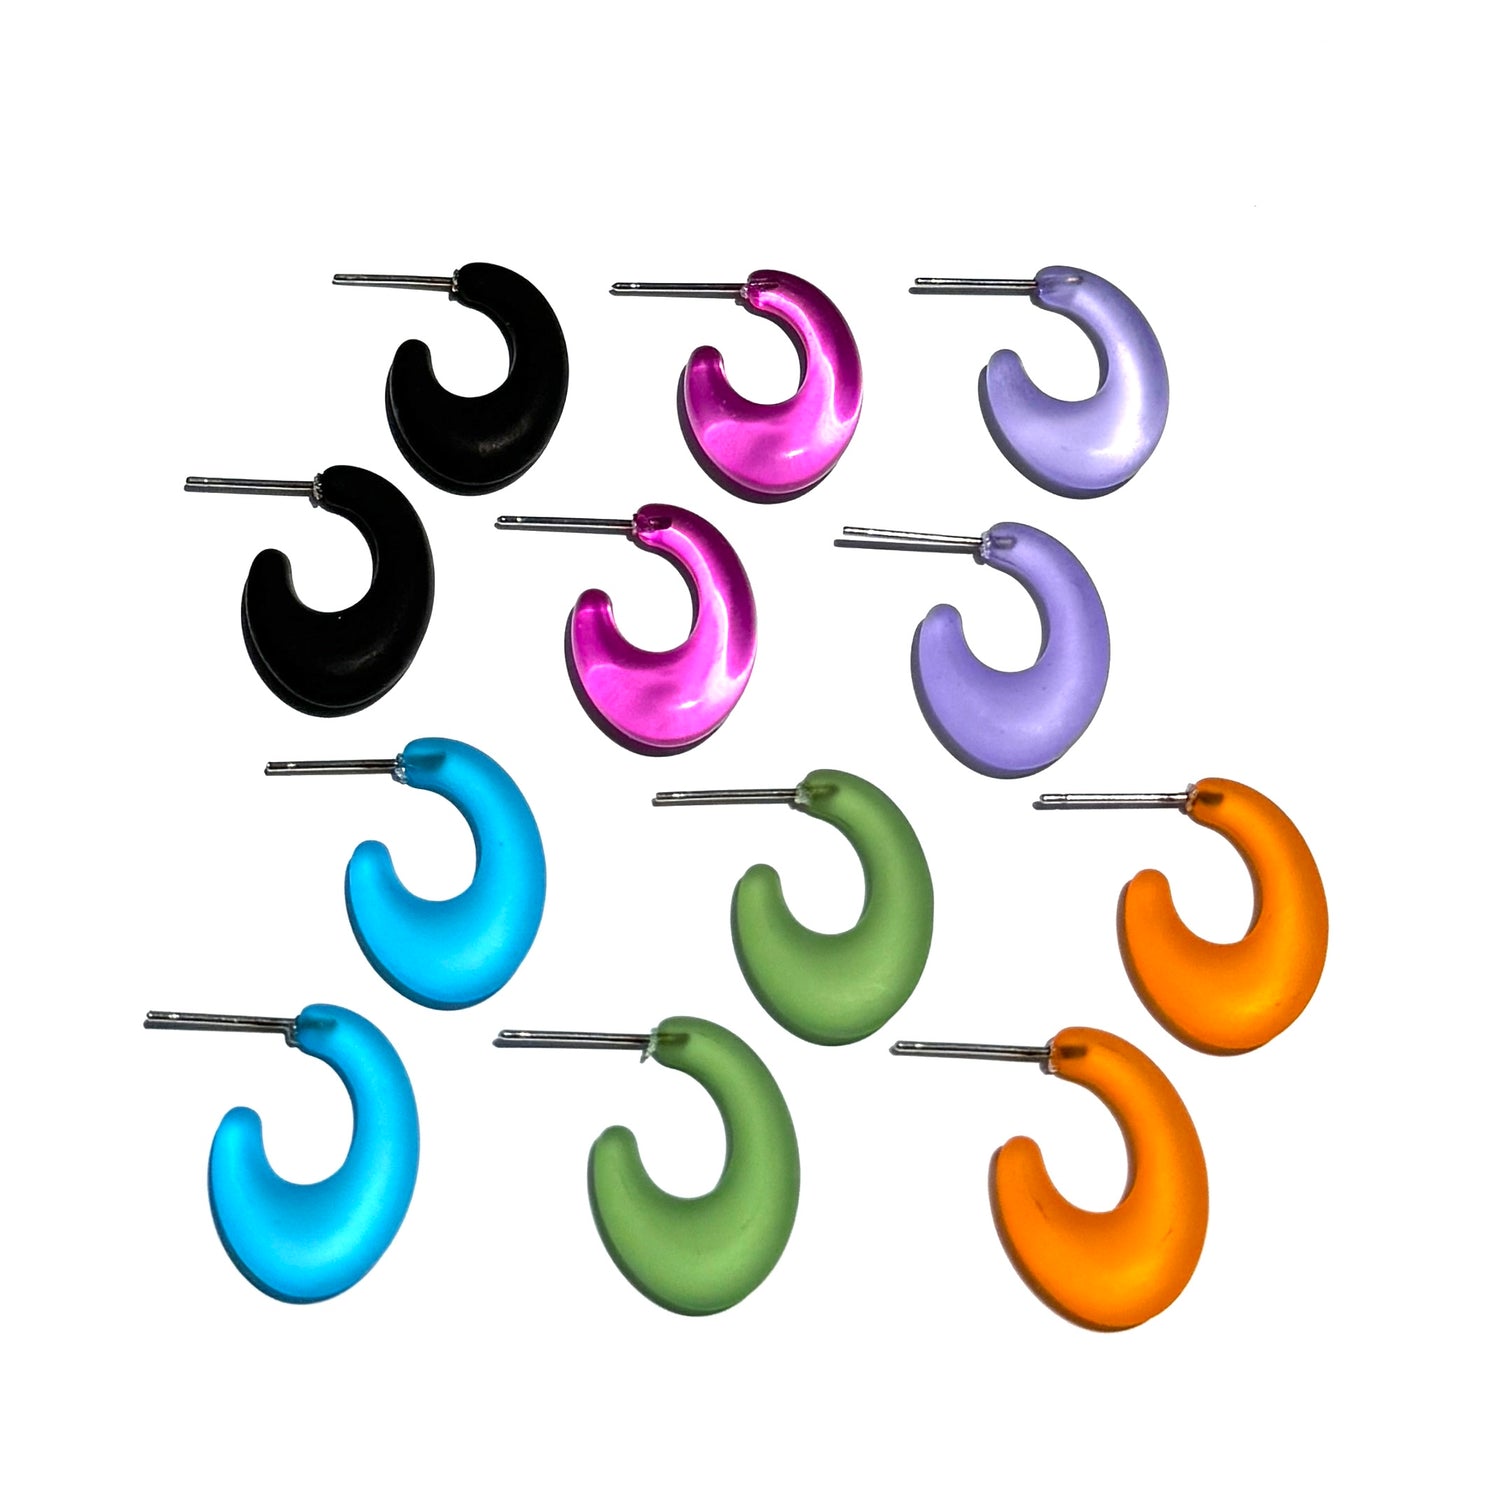 leetie frisco hoop earrings in lots of colors - oval shaped